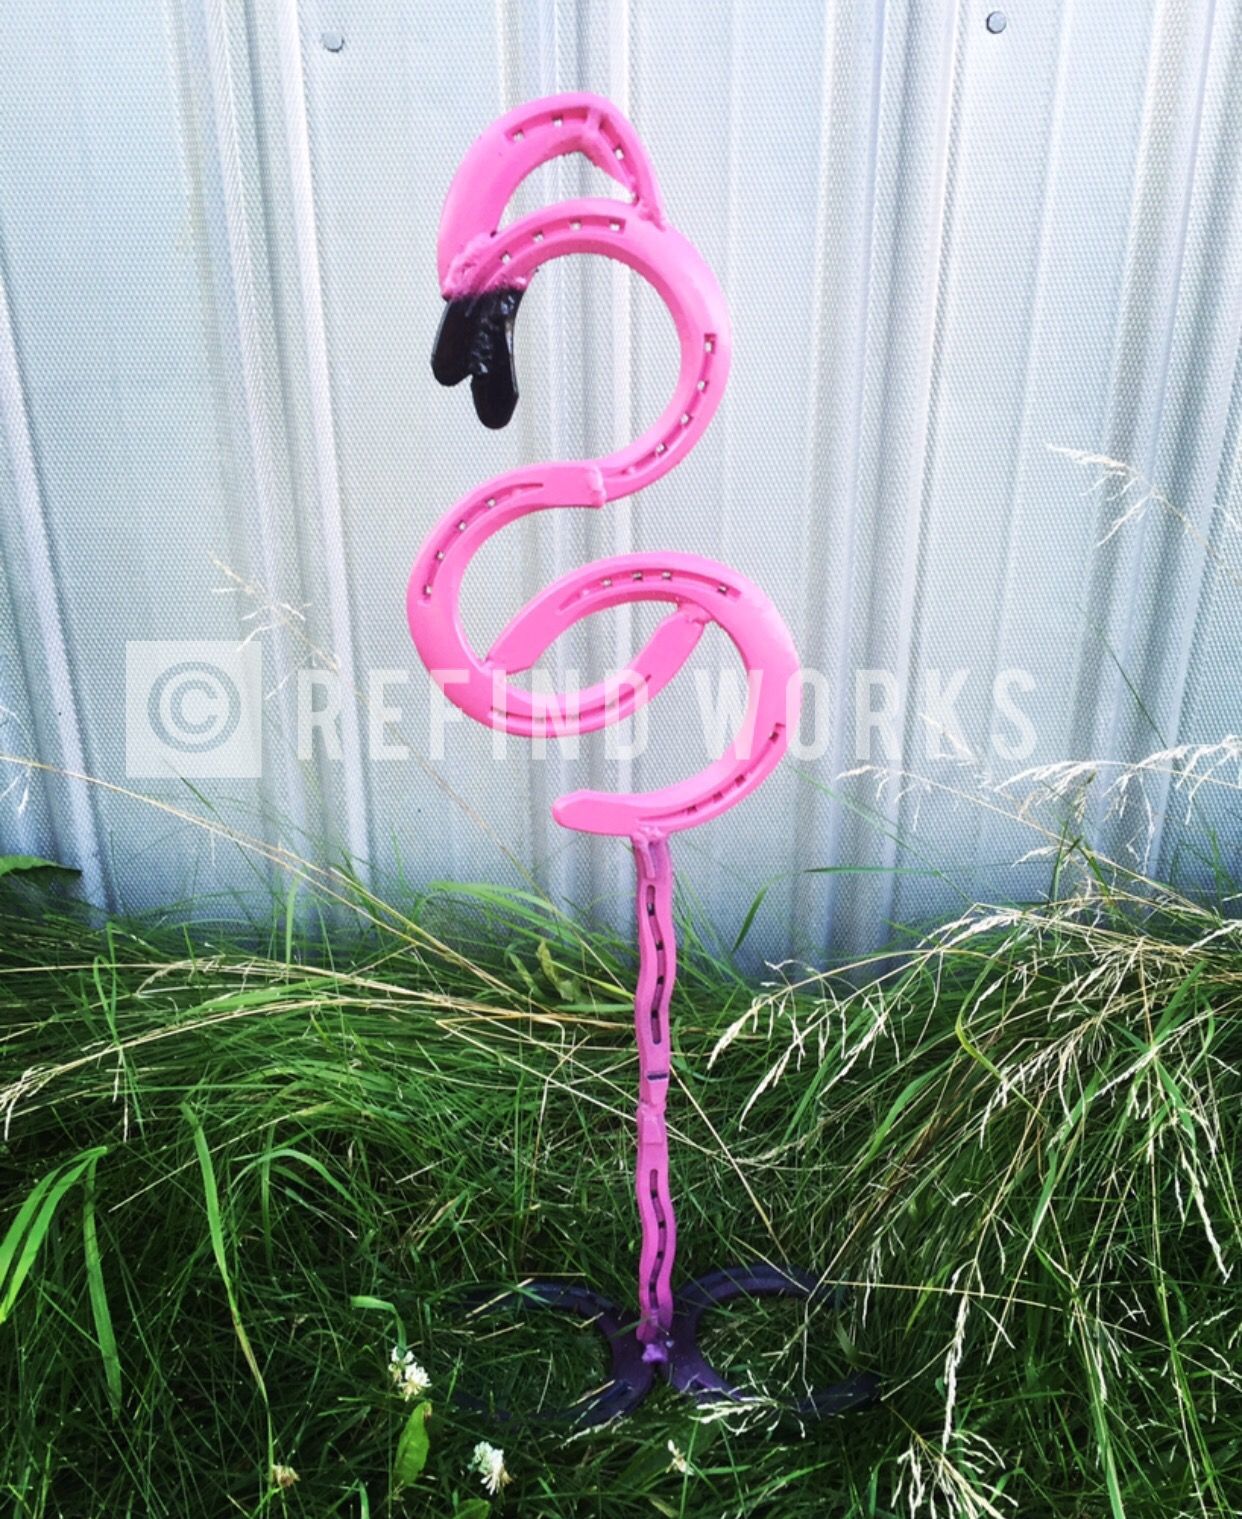 Metallkunst Garten Genial Horseshoe Flamingo by Refind Works Brian Quail